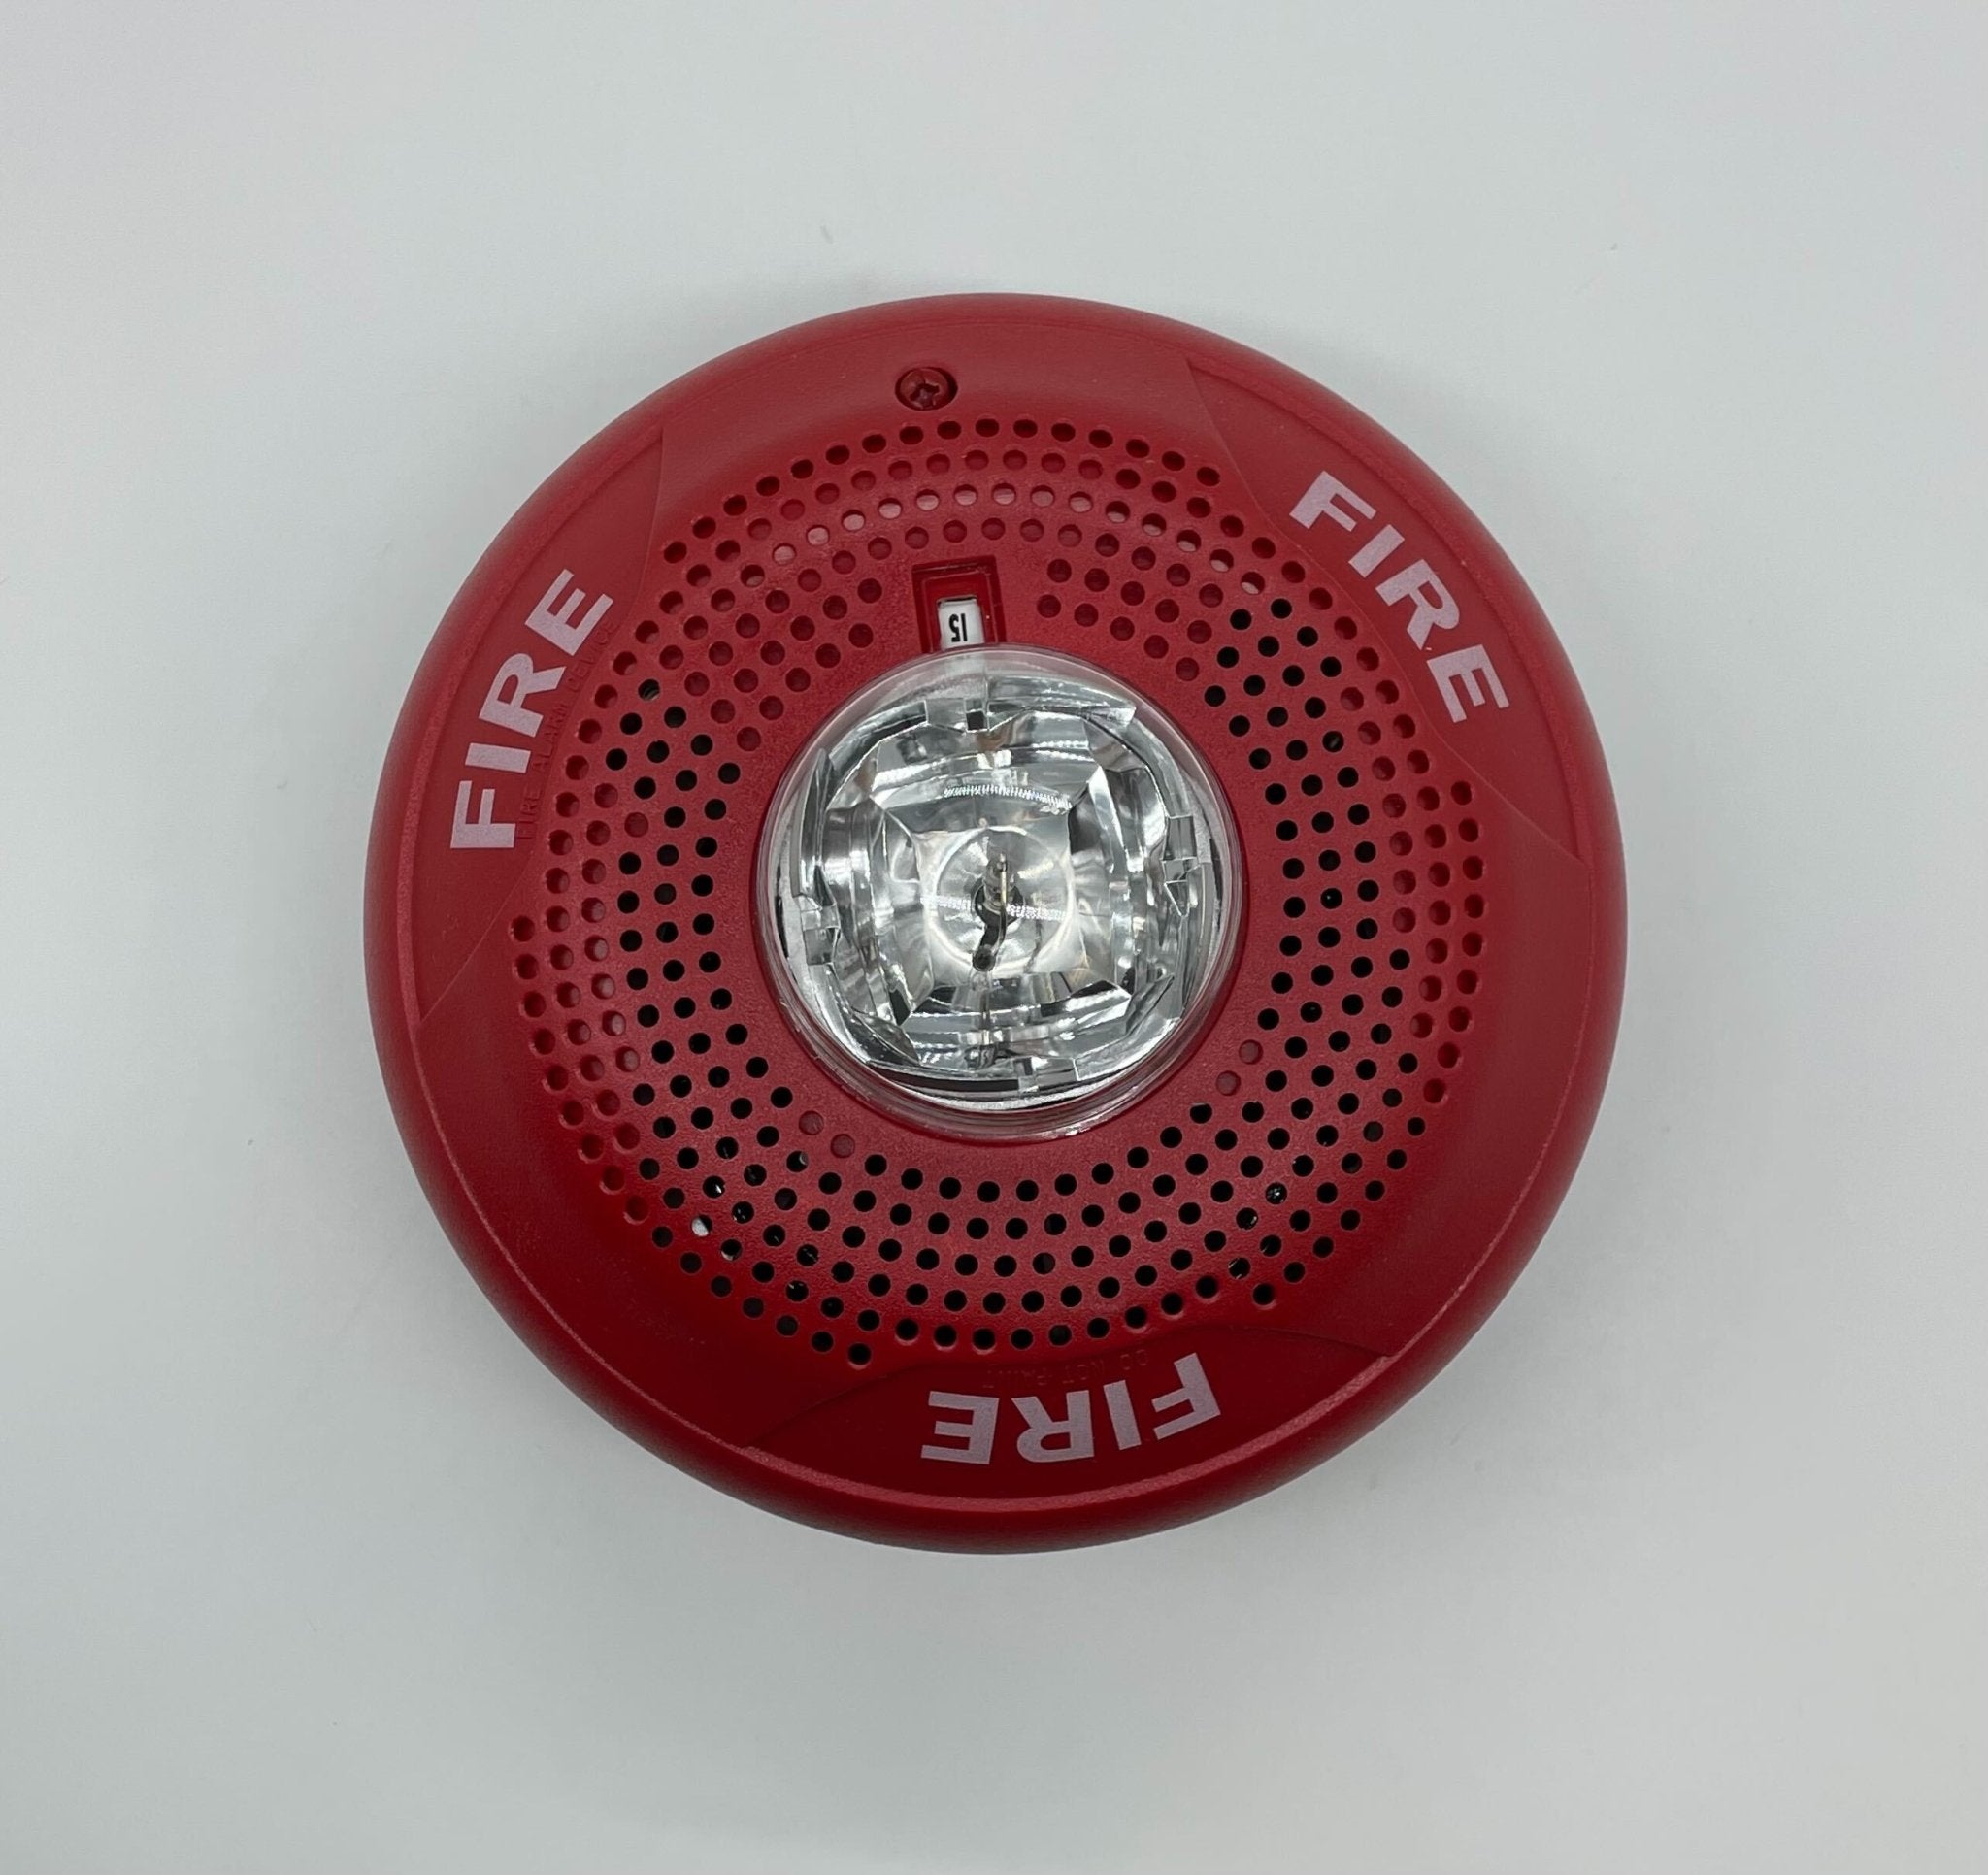 System Sensor SPSCR - The Fire Alarm Supplier